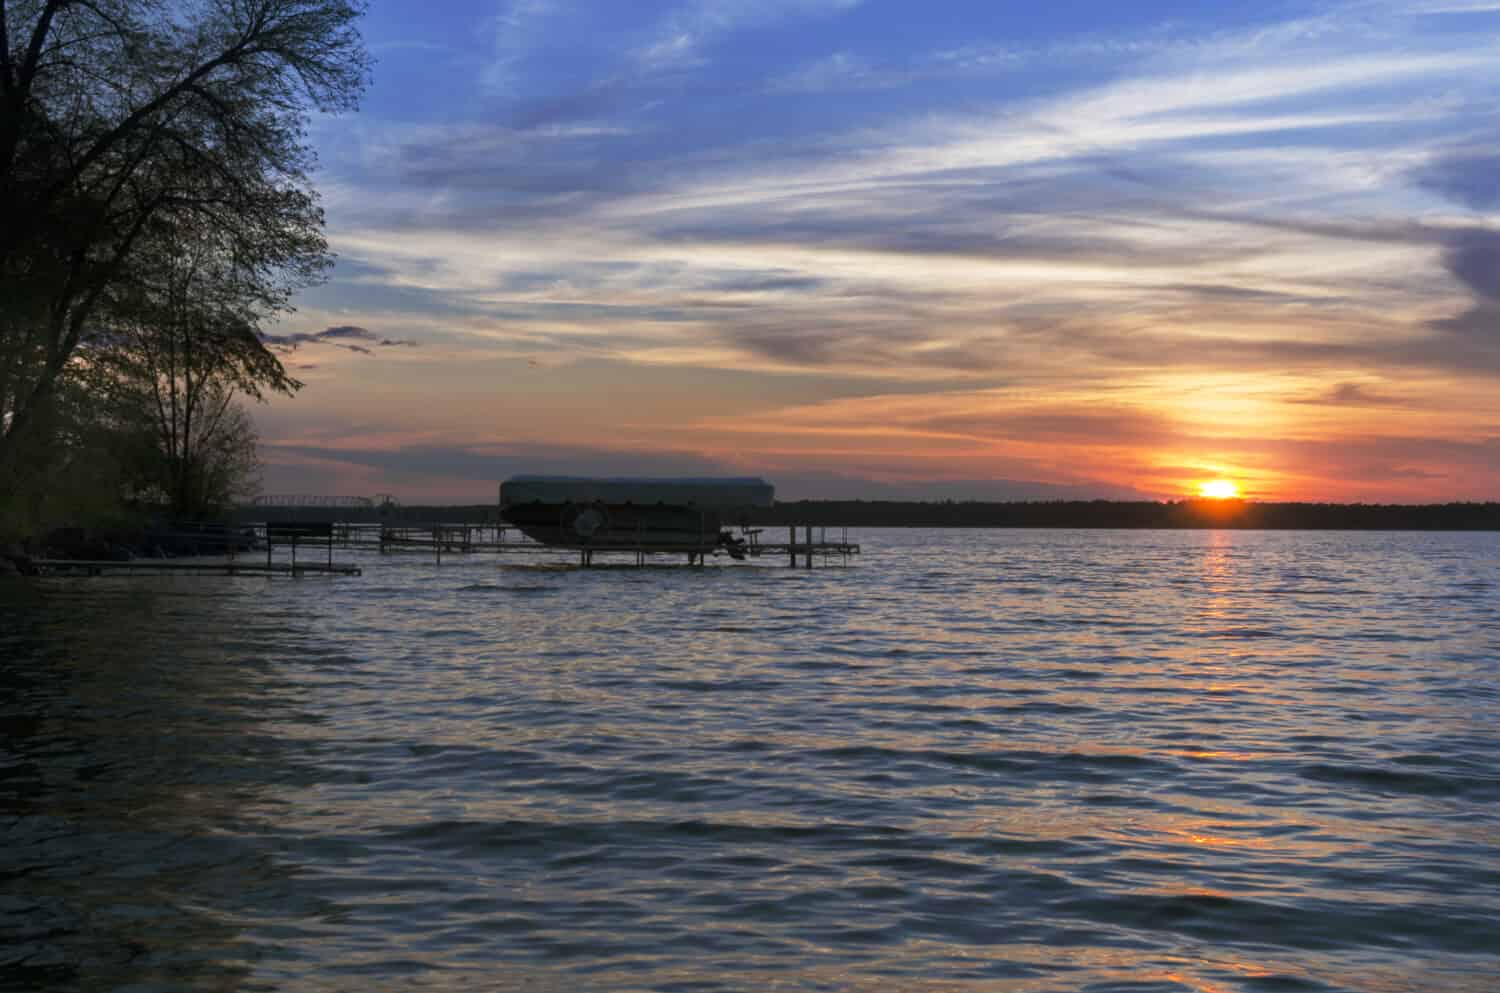 Sunset With A Single Boat Over Leech Lake, Minnesota United States